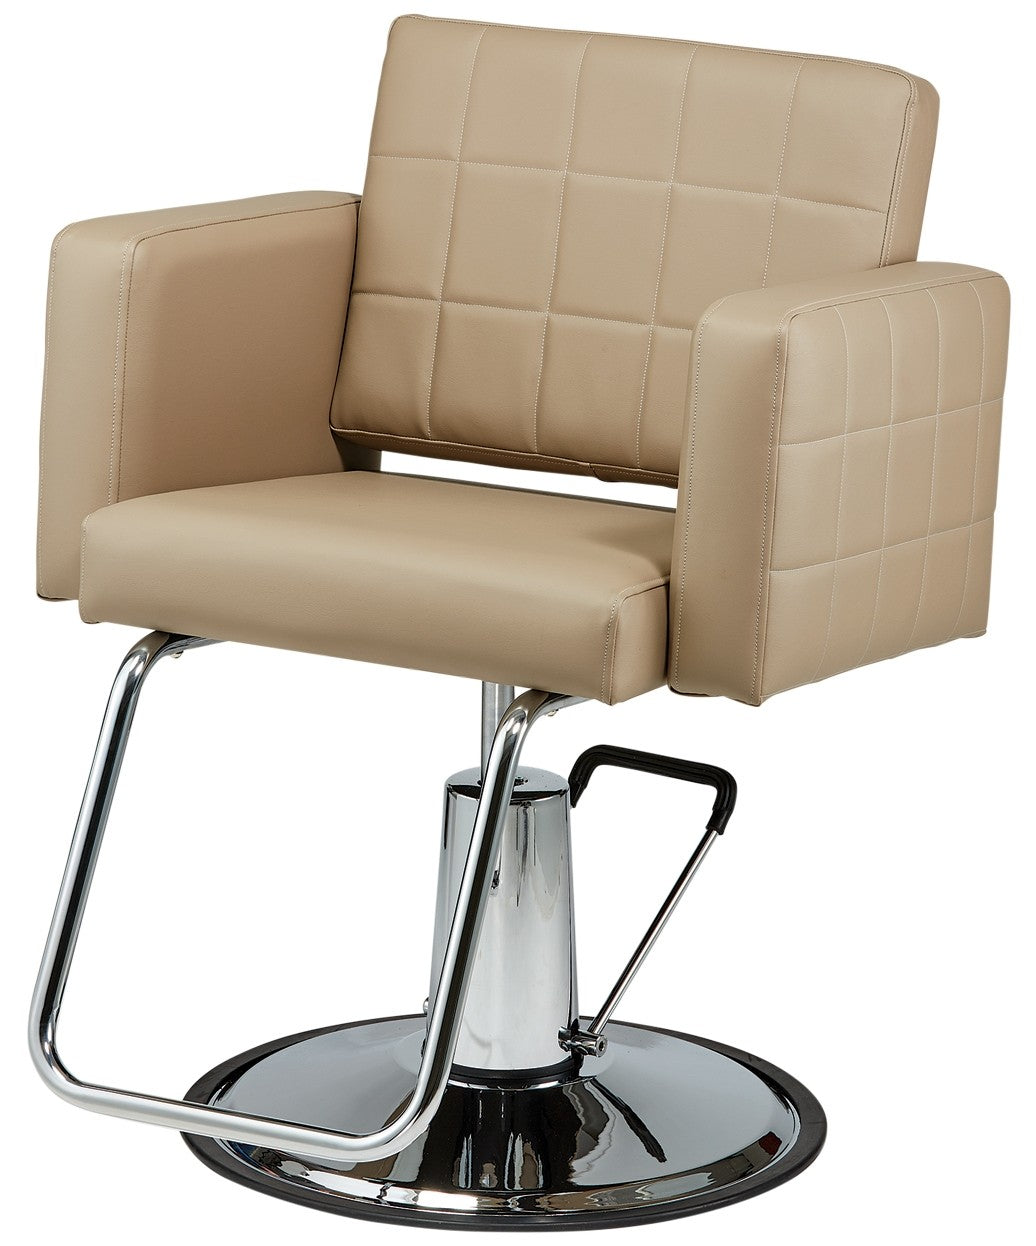 Pibbs 2106 Matera Styling Chair